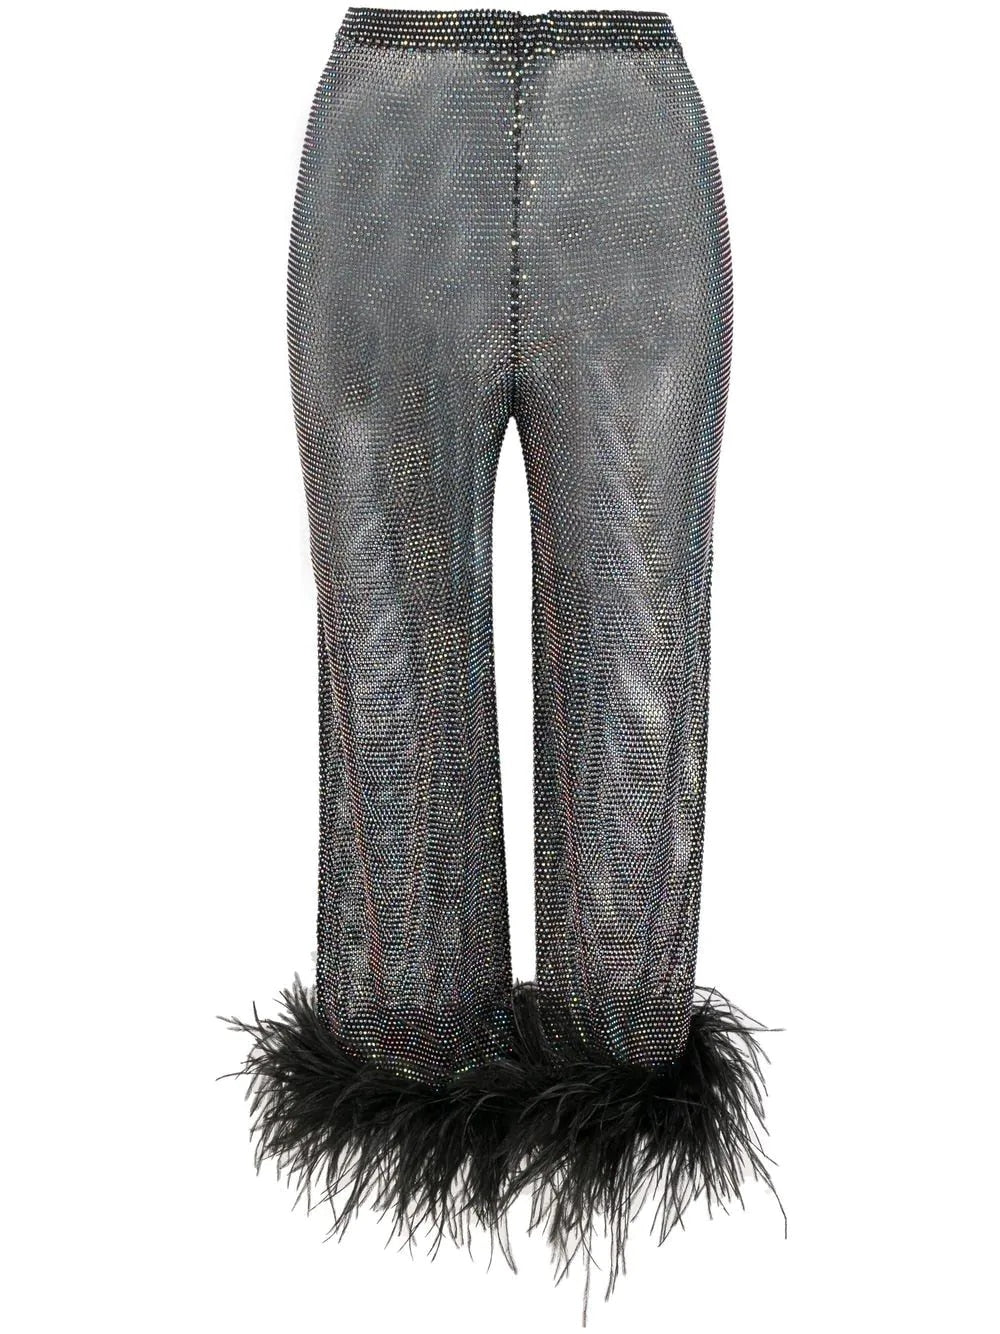 feathered trim diamond mesh pants all black / one size